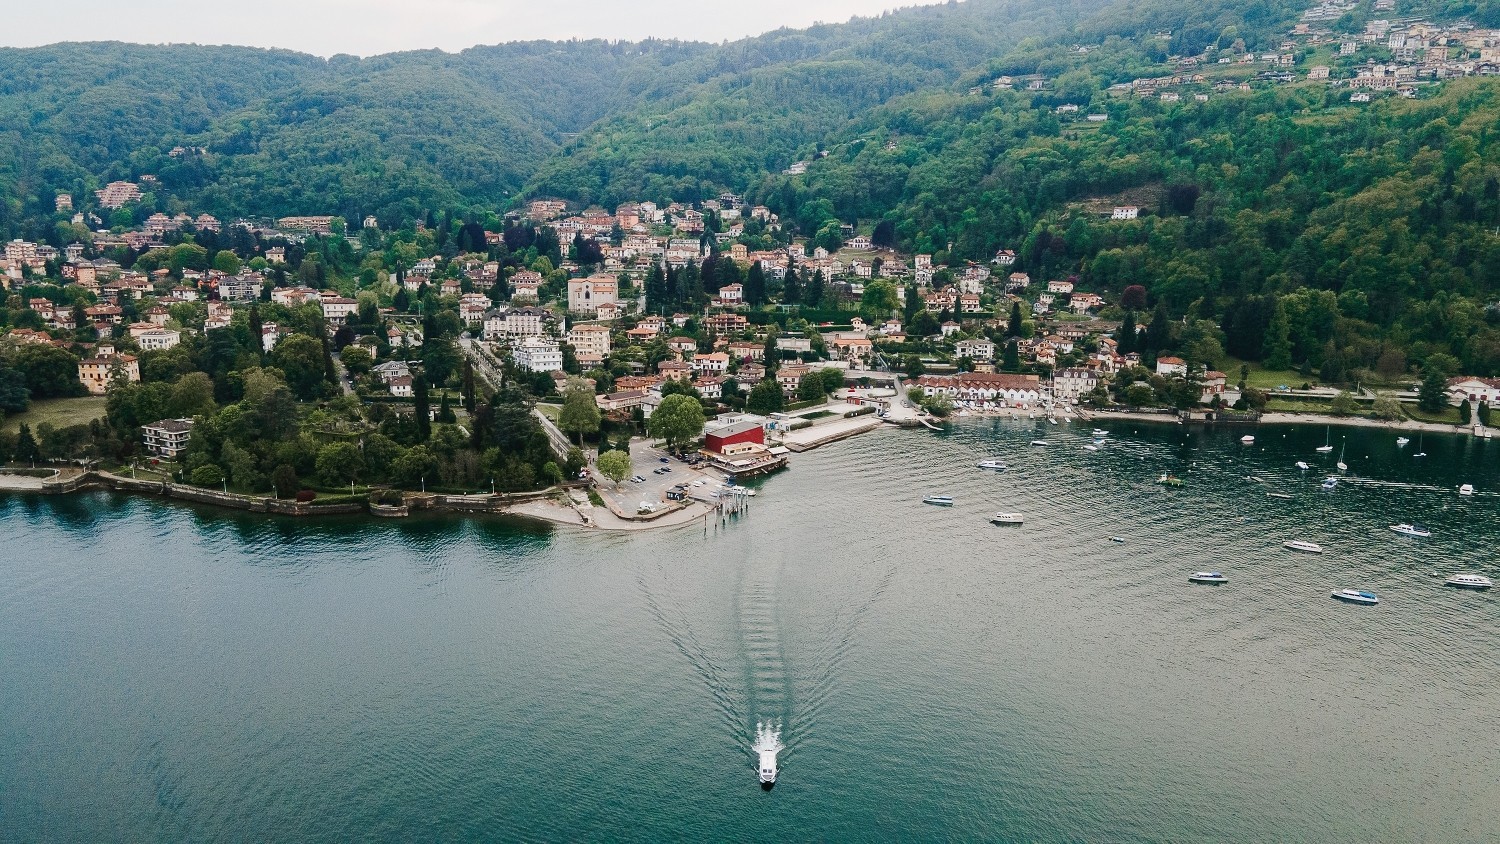 View on Stresa on Lake Maggiore wedding destination in Italy